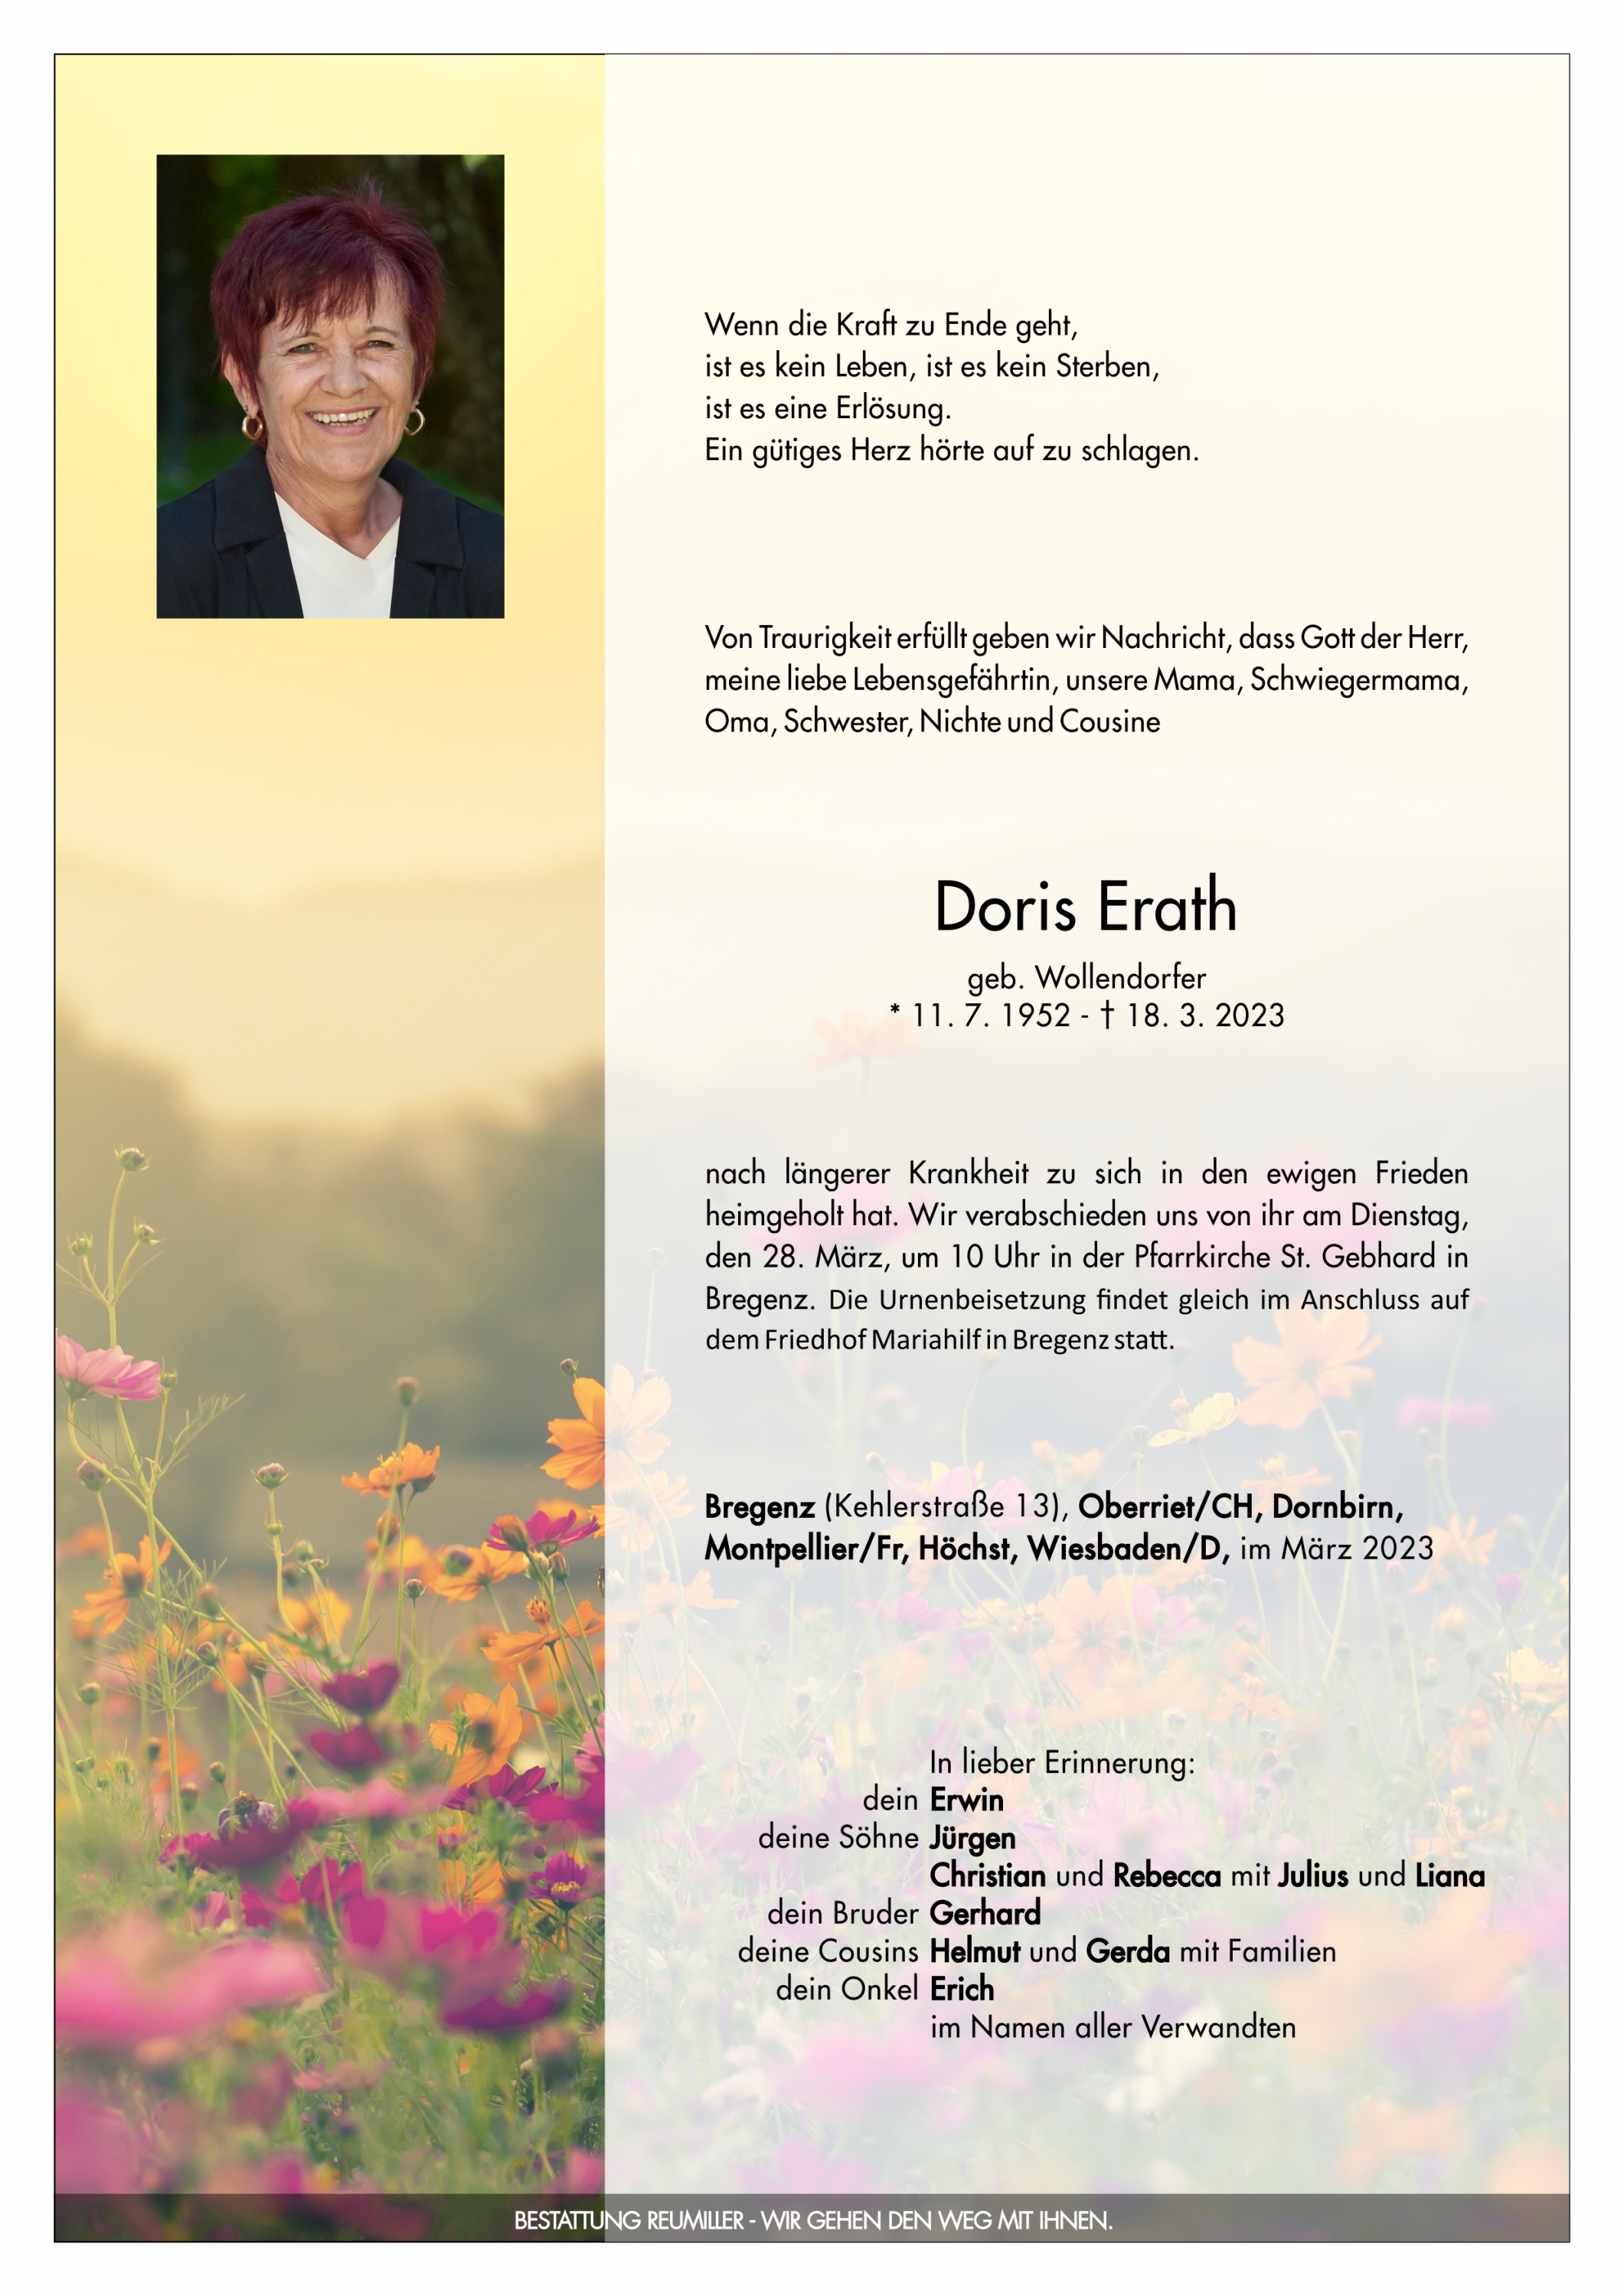 Doris Erath